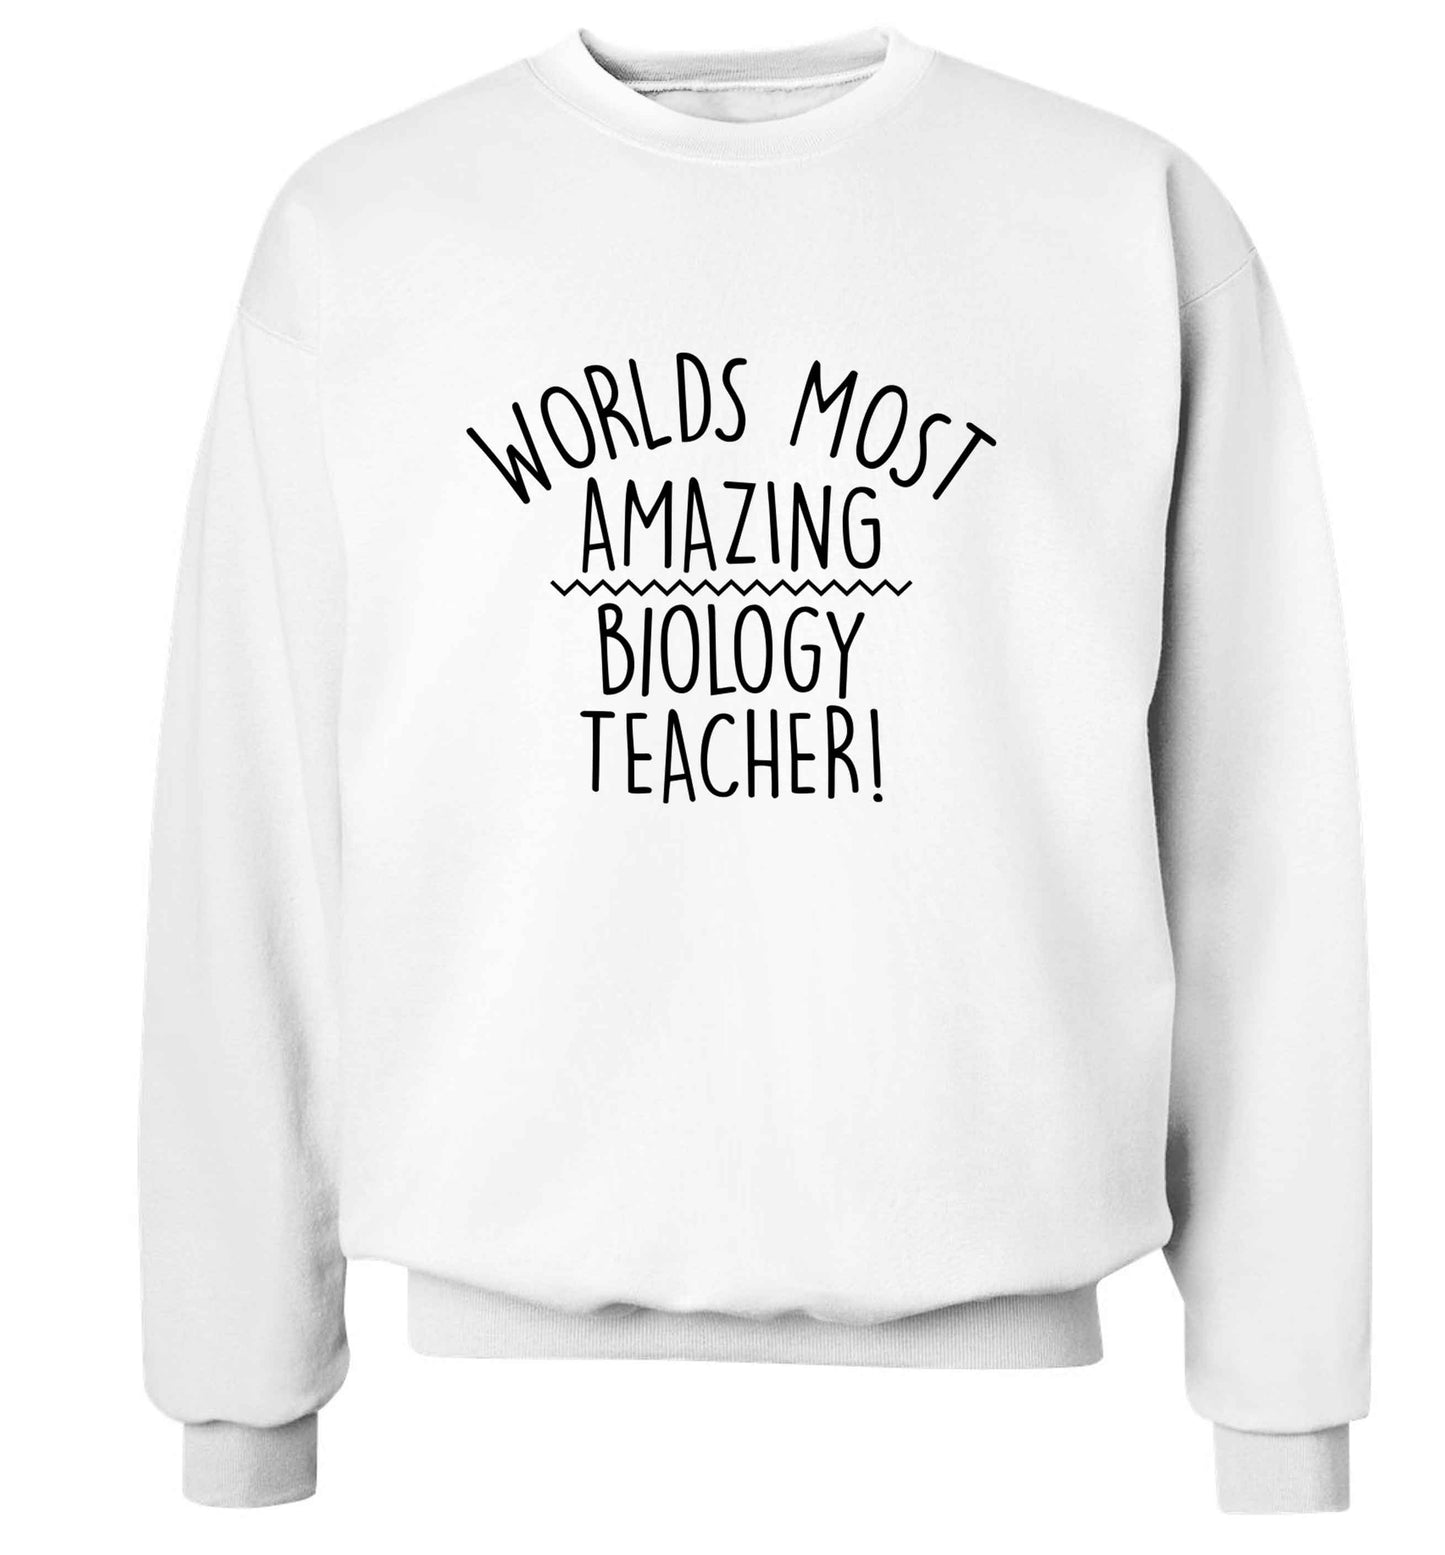 Worlds most amazing biology teacher adult's unisex white sweater 2XL